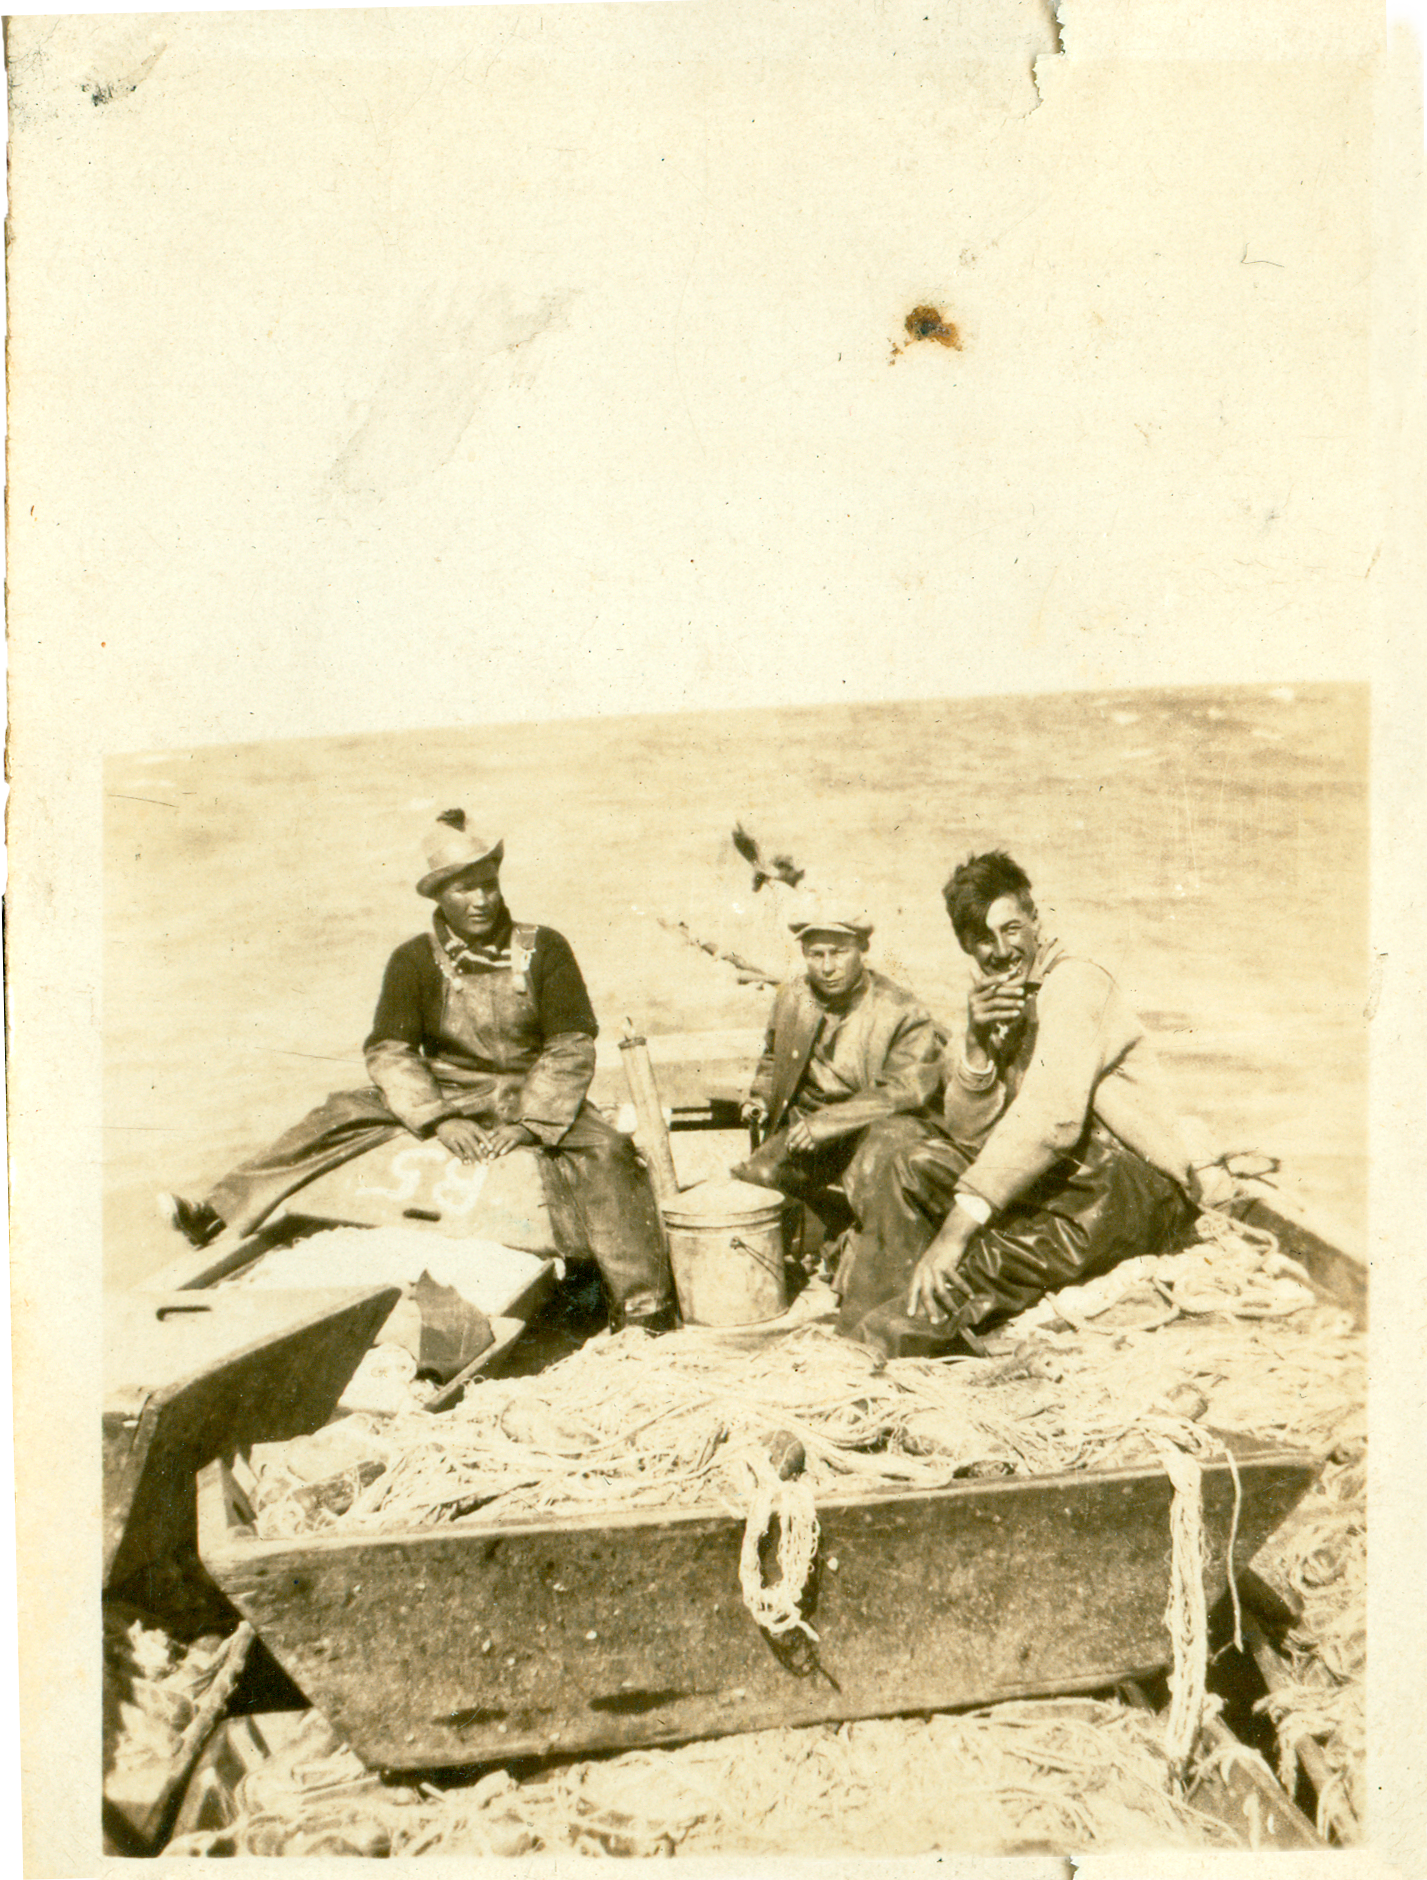 Fishing in Lake Winnipeg, early 1900s